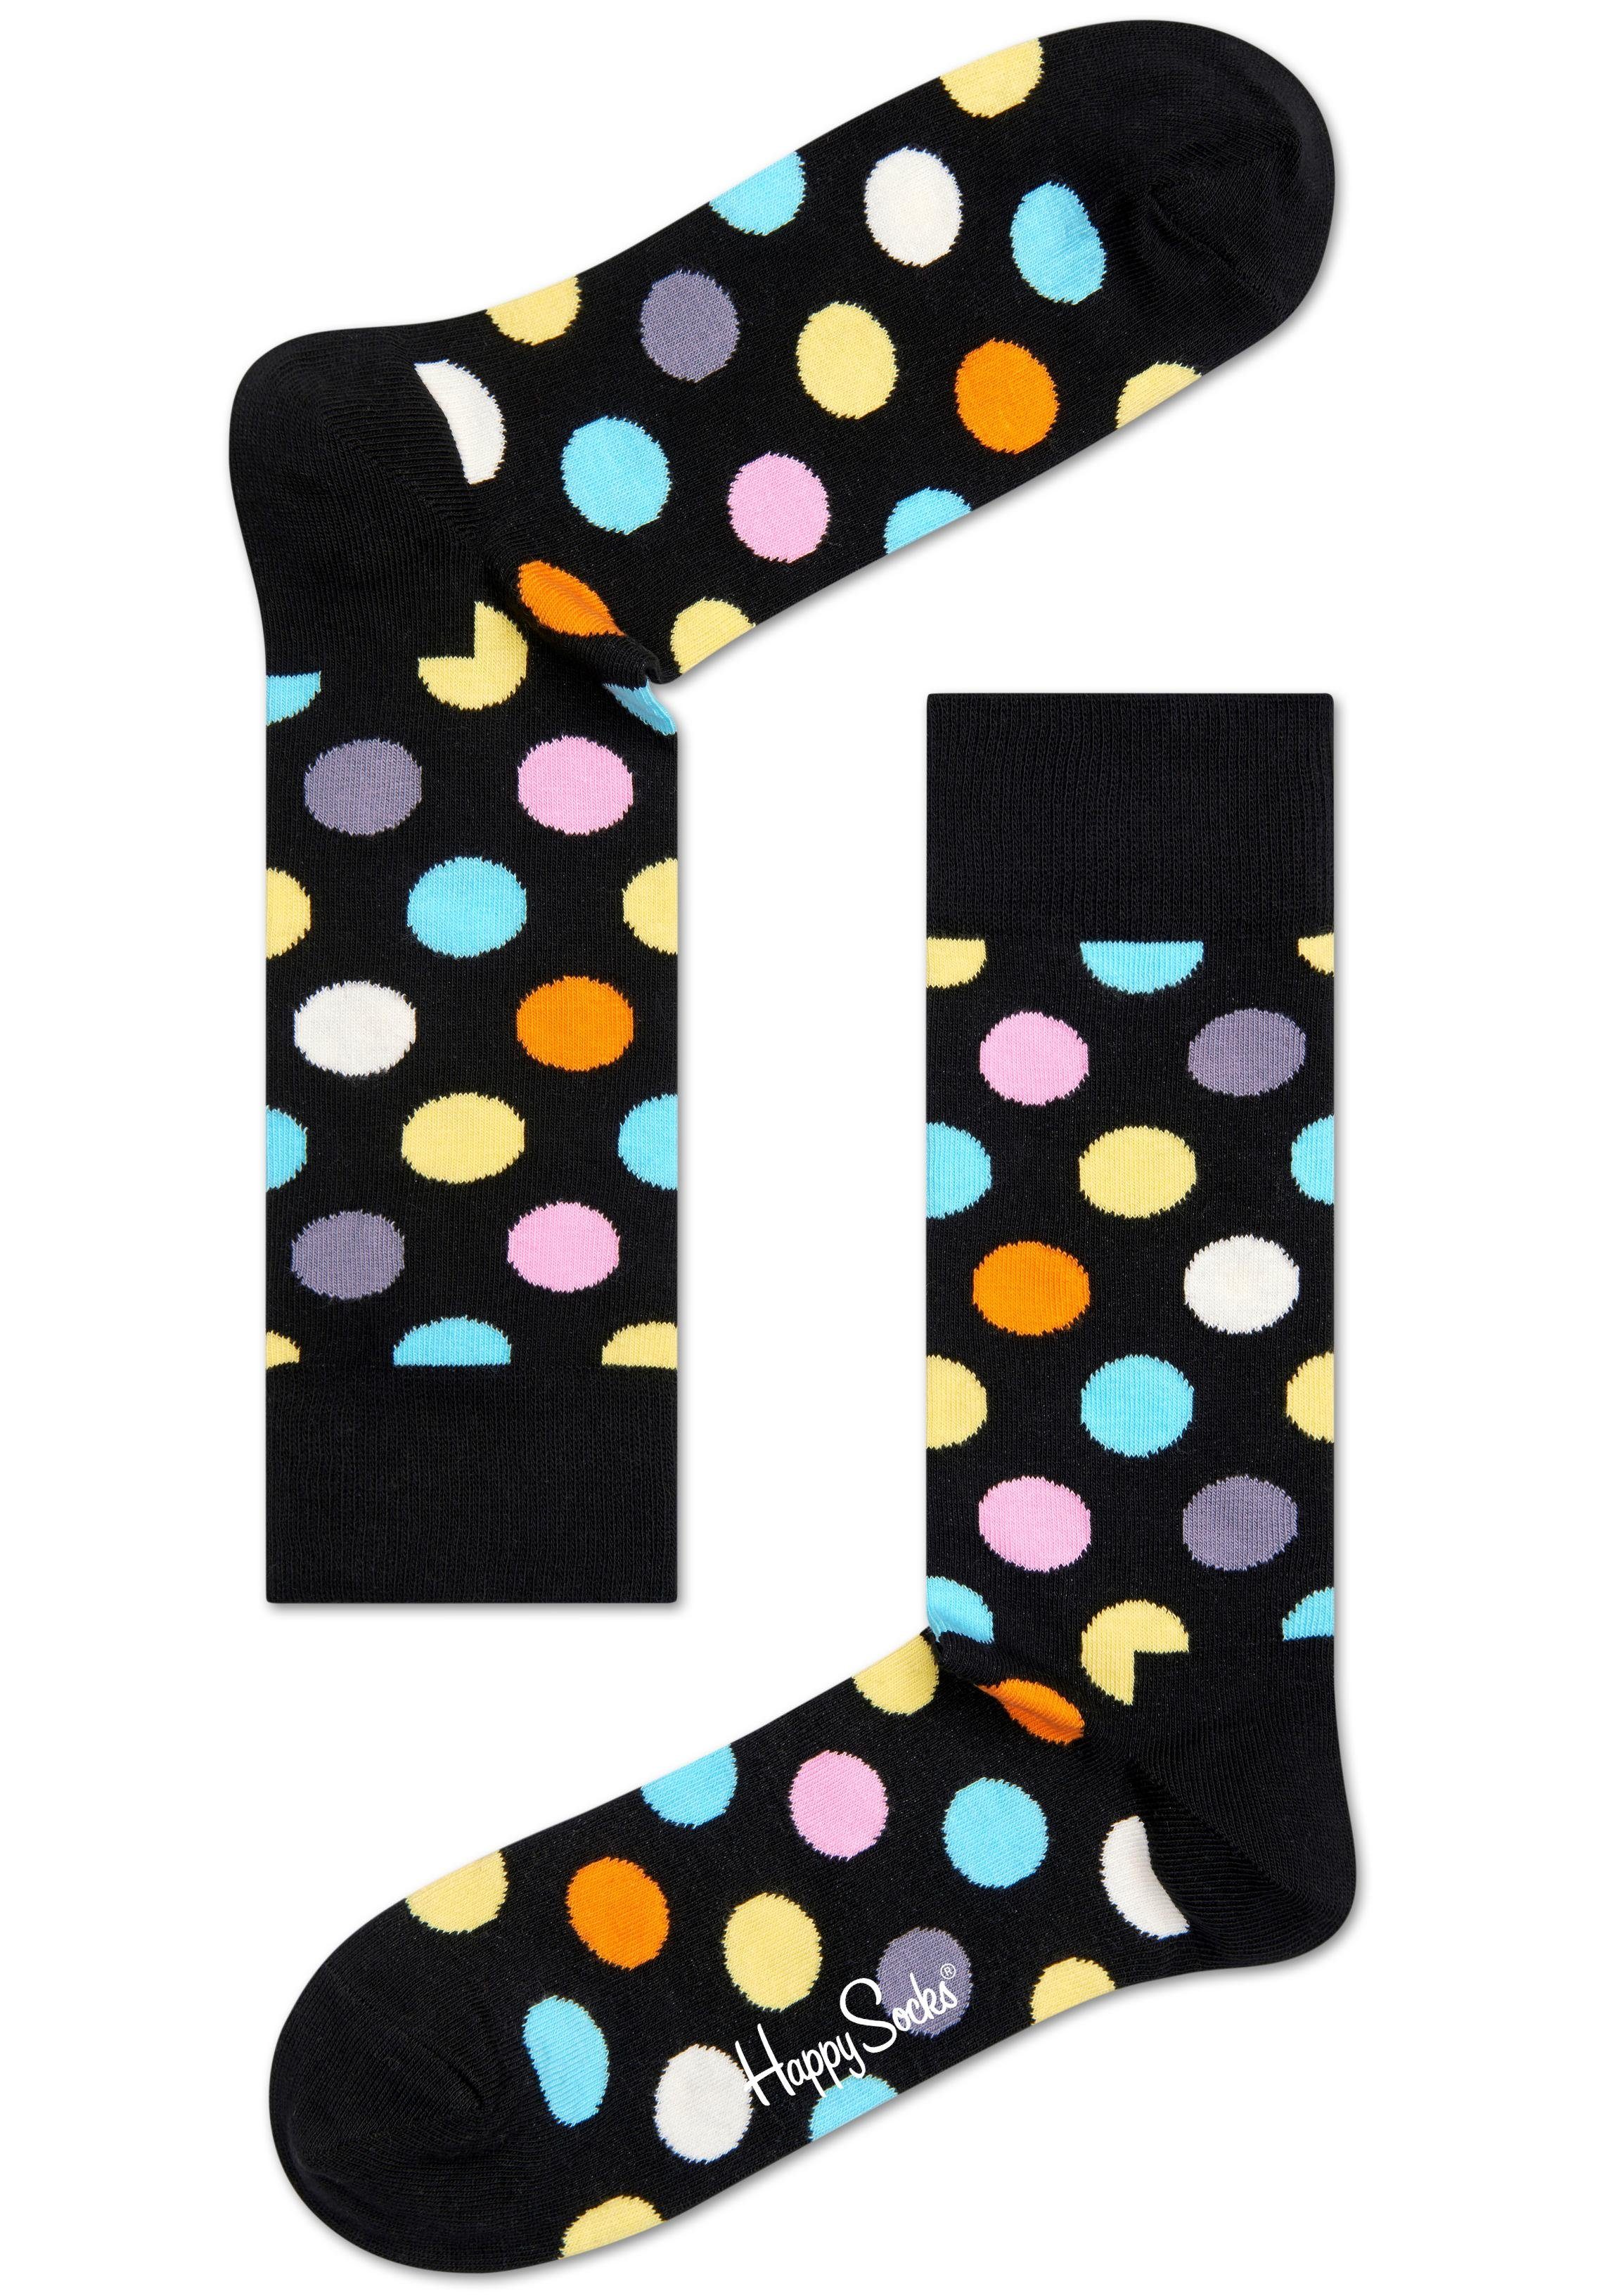 Wäsche/Bademode Socken Happy Socks Socken Big Dot mit buntem Punktemuster